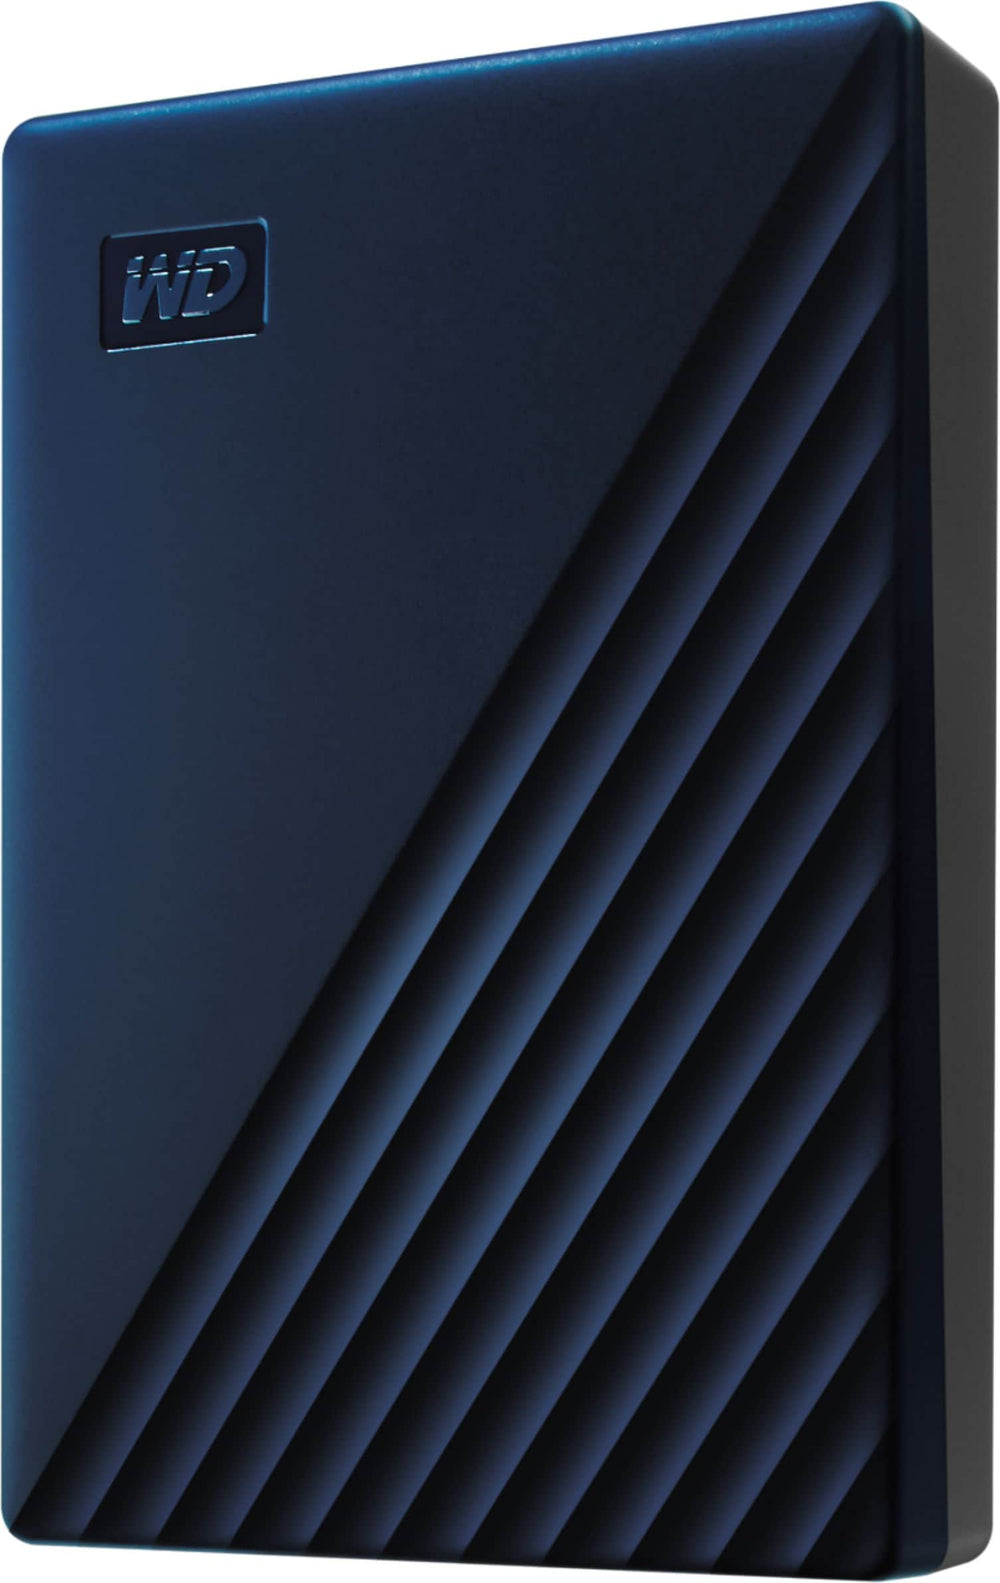 WD - My Passport for Mac 4TB External USB 3.0 Portable Hard Drive - Blue_1